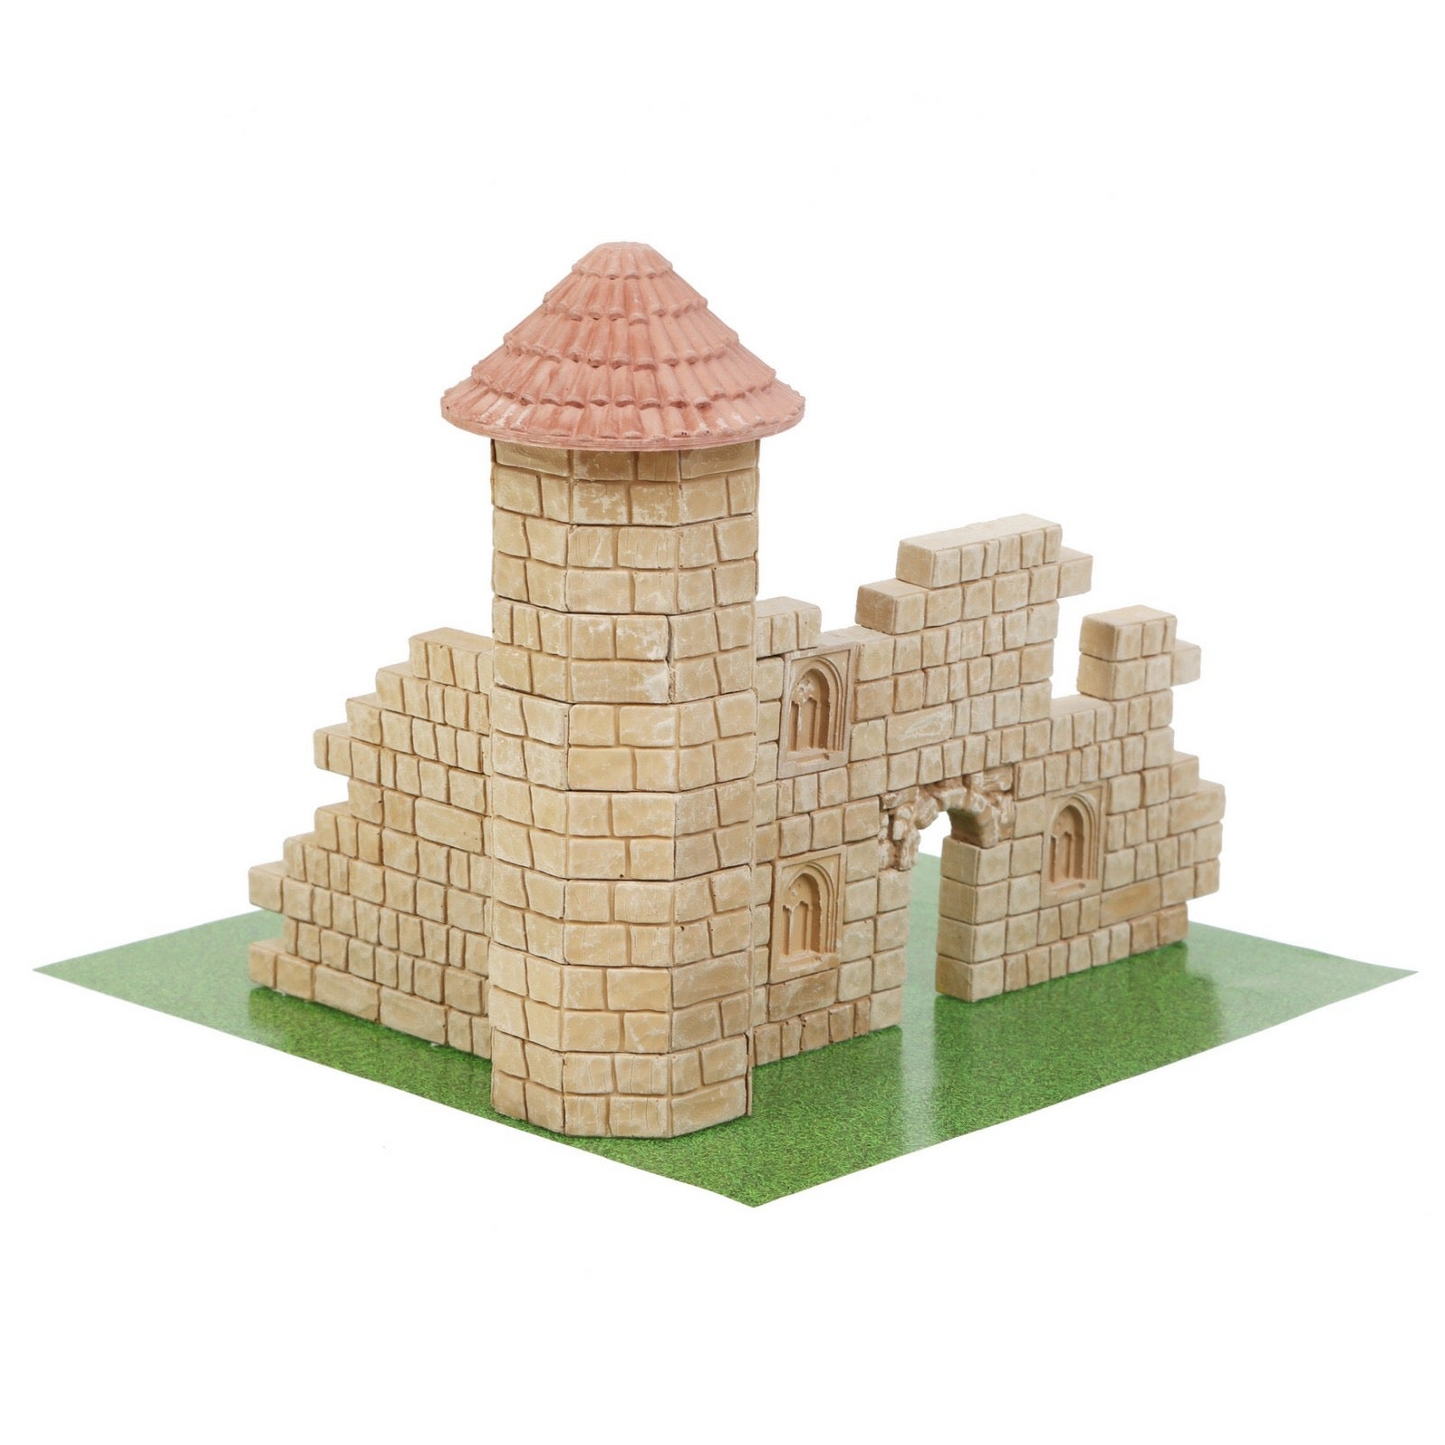 Mini Bricks Construction Set - Ruins of Palace